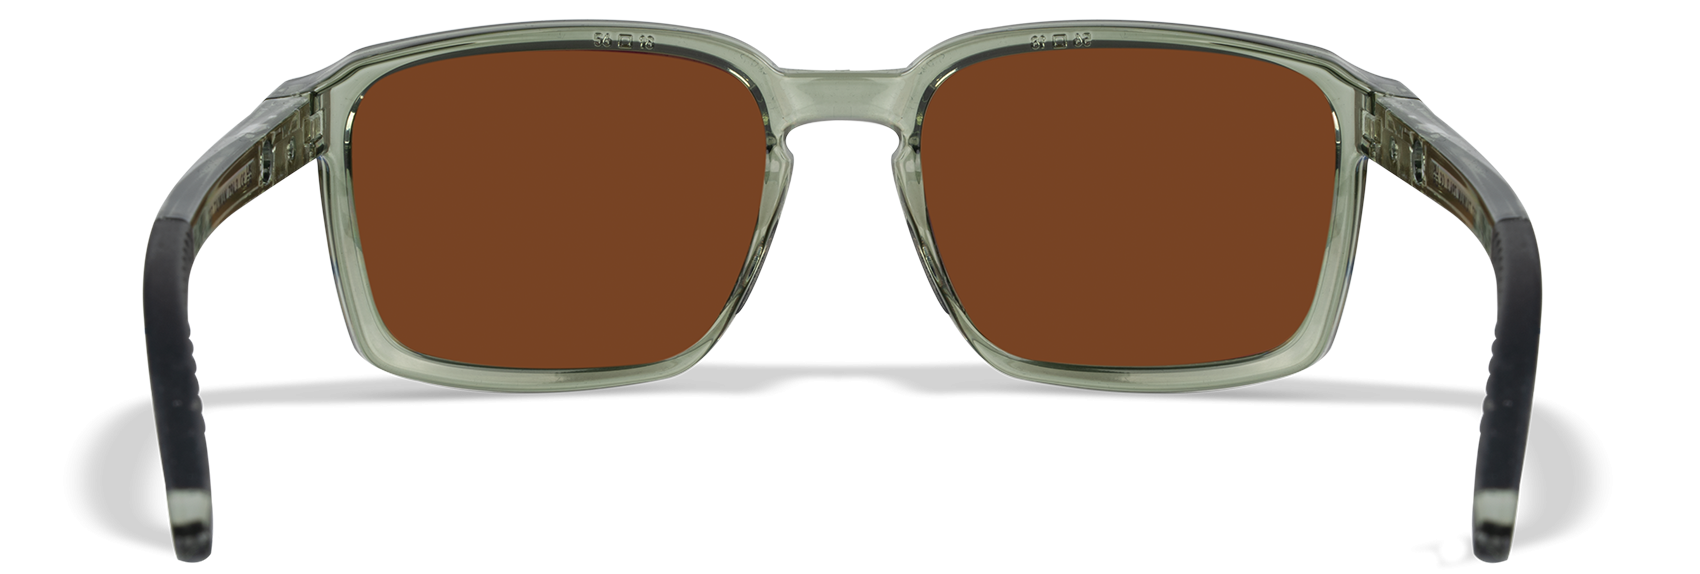 Wiley X Alfa Sunglasses, 3 colors